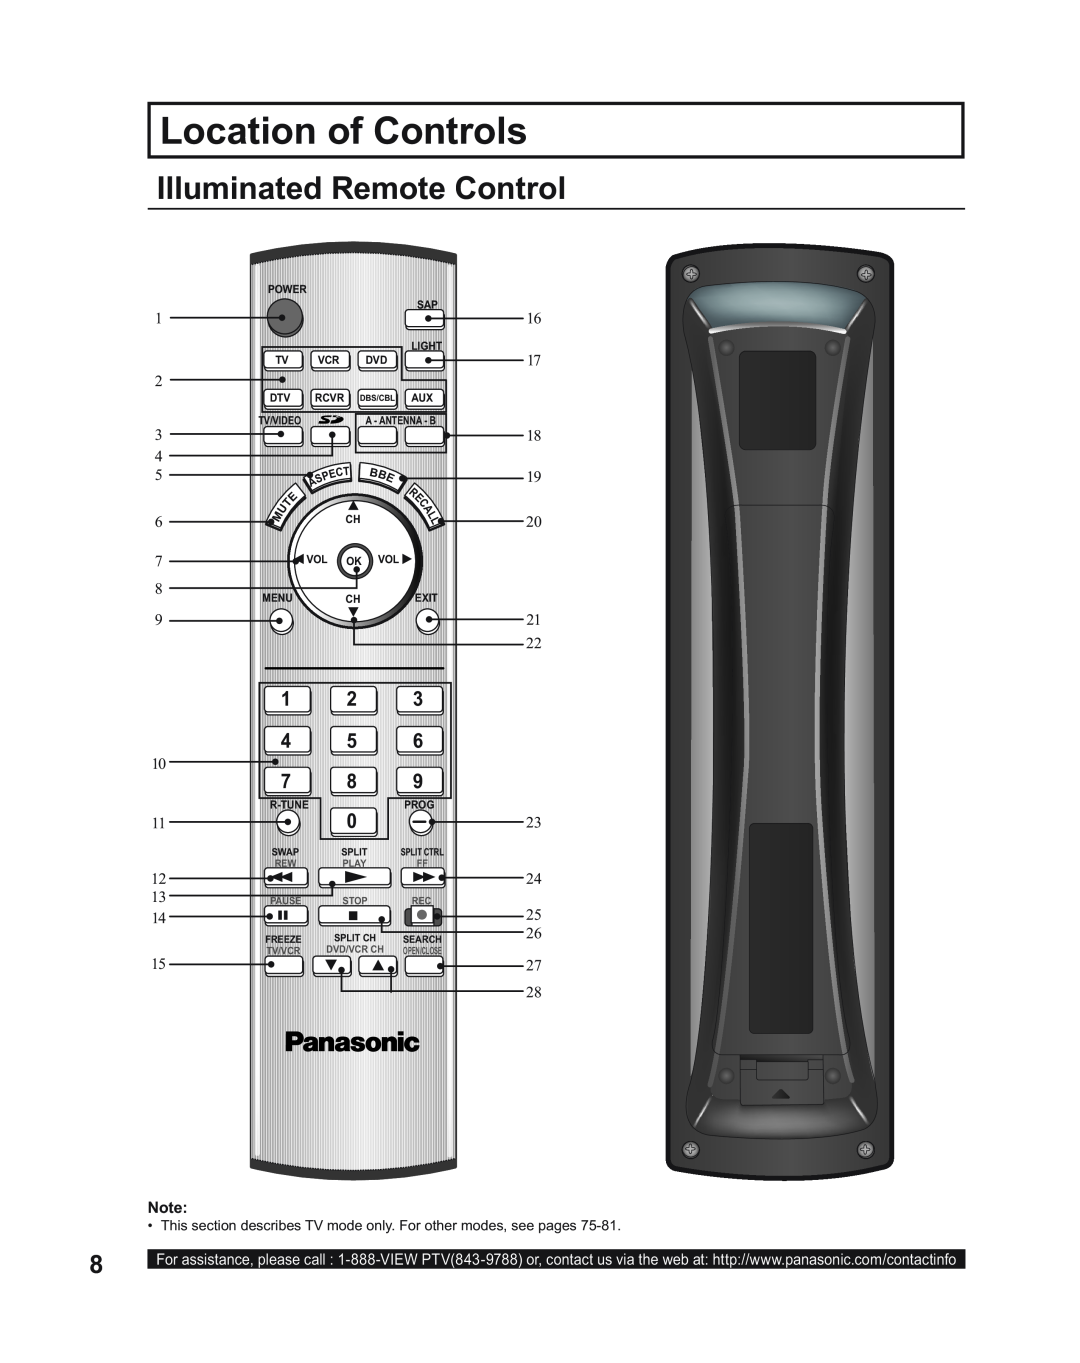 Panasonic PT-60LC14, PT-43LC14, PT-50LC14 manual Location of Controls, Illuminated Remote Control, Power, Menu, R-Tune, Prog 